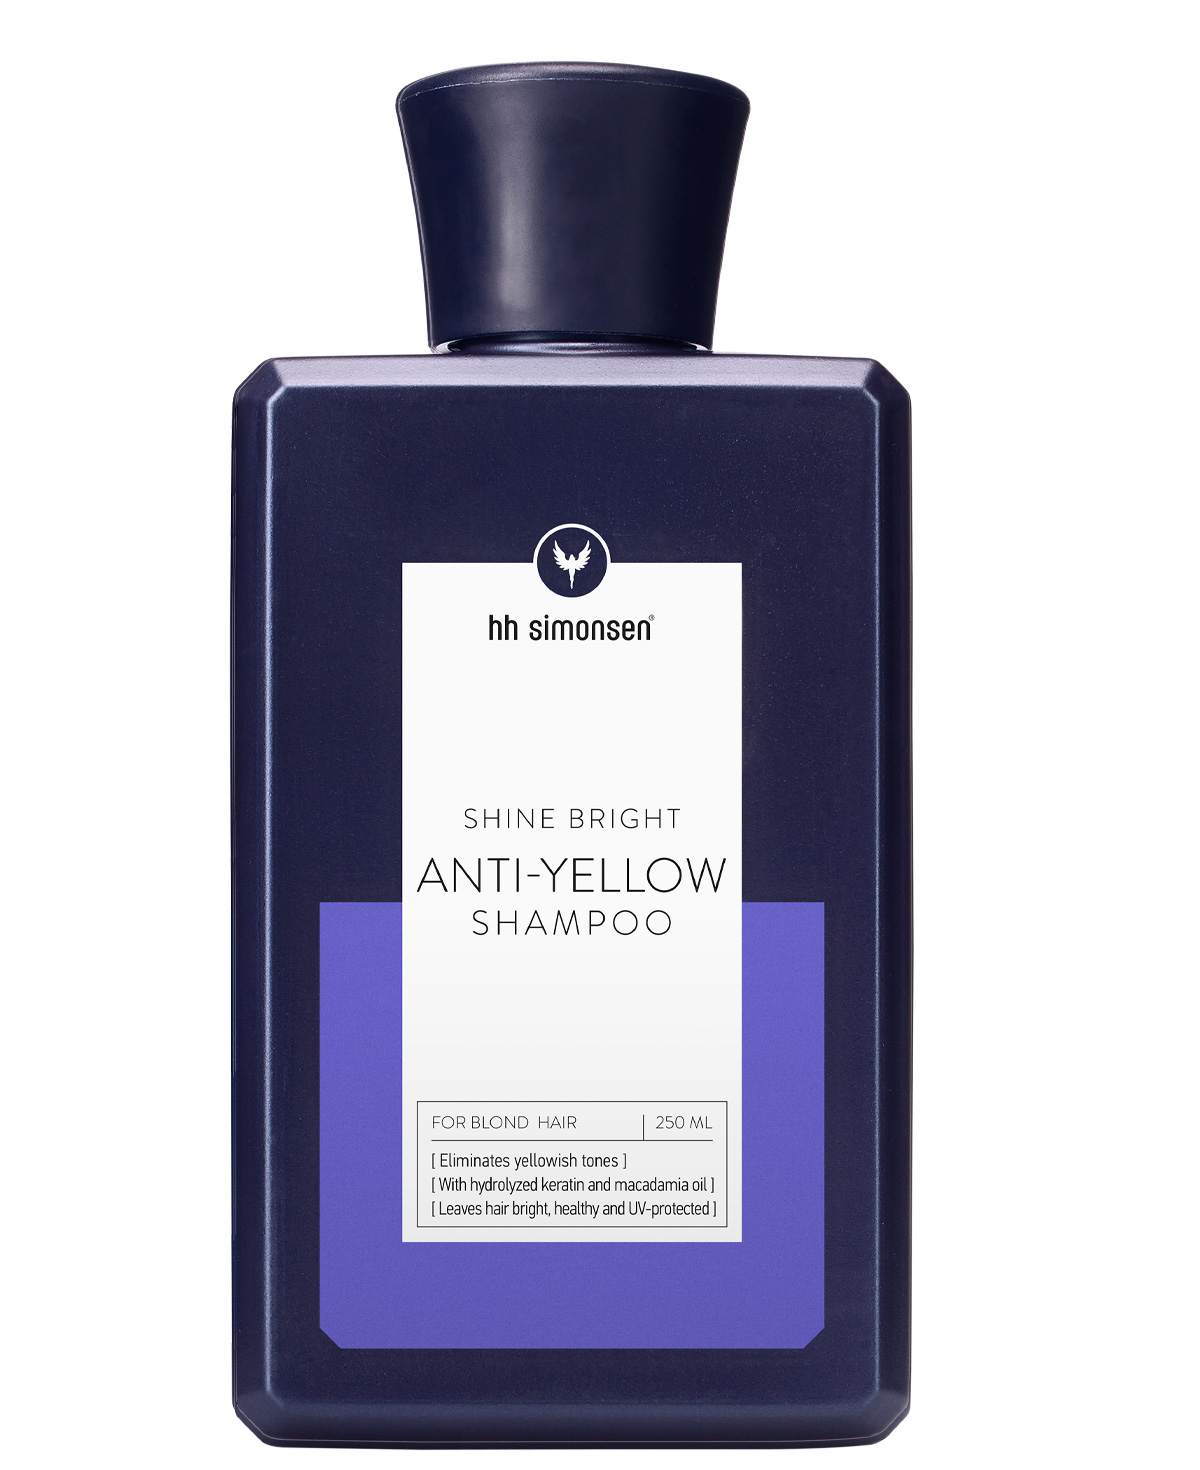 HH Simonsen Anti-yellow Shampoo 250ml